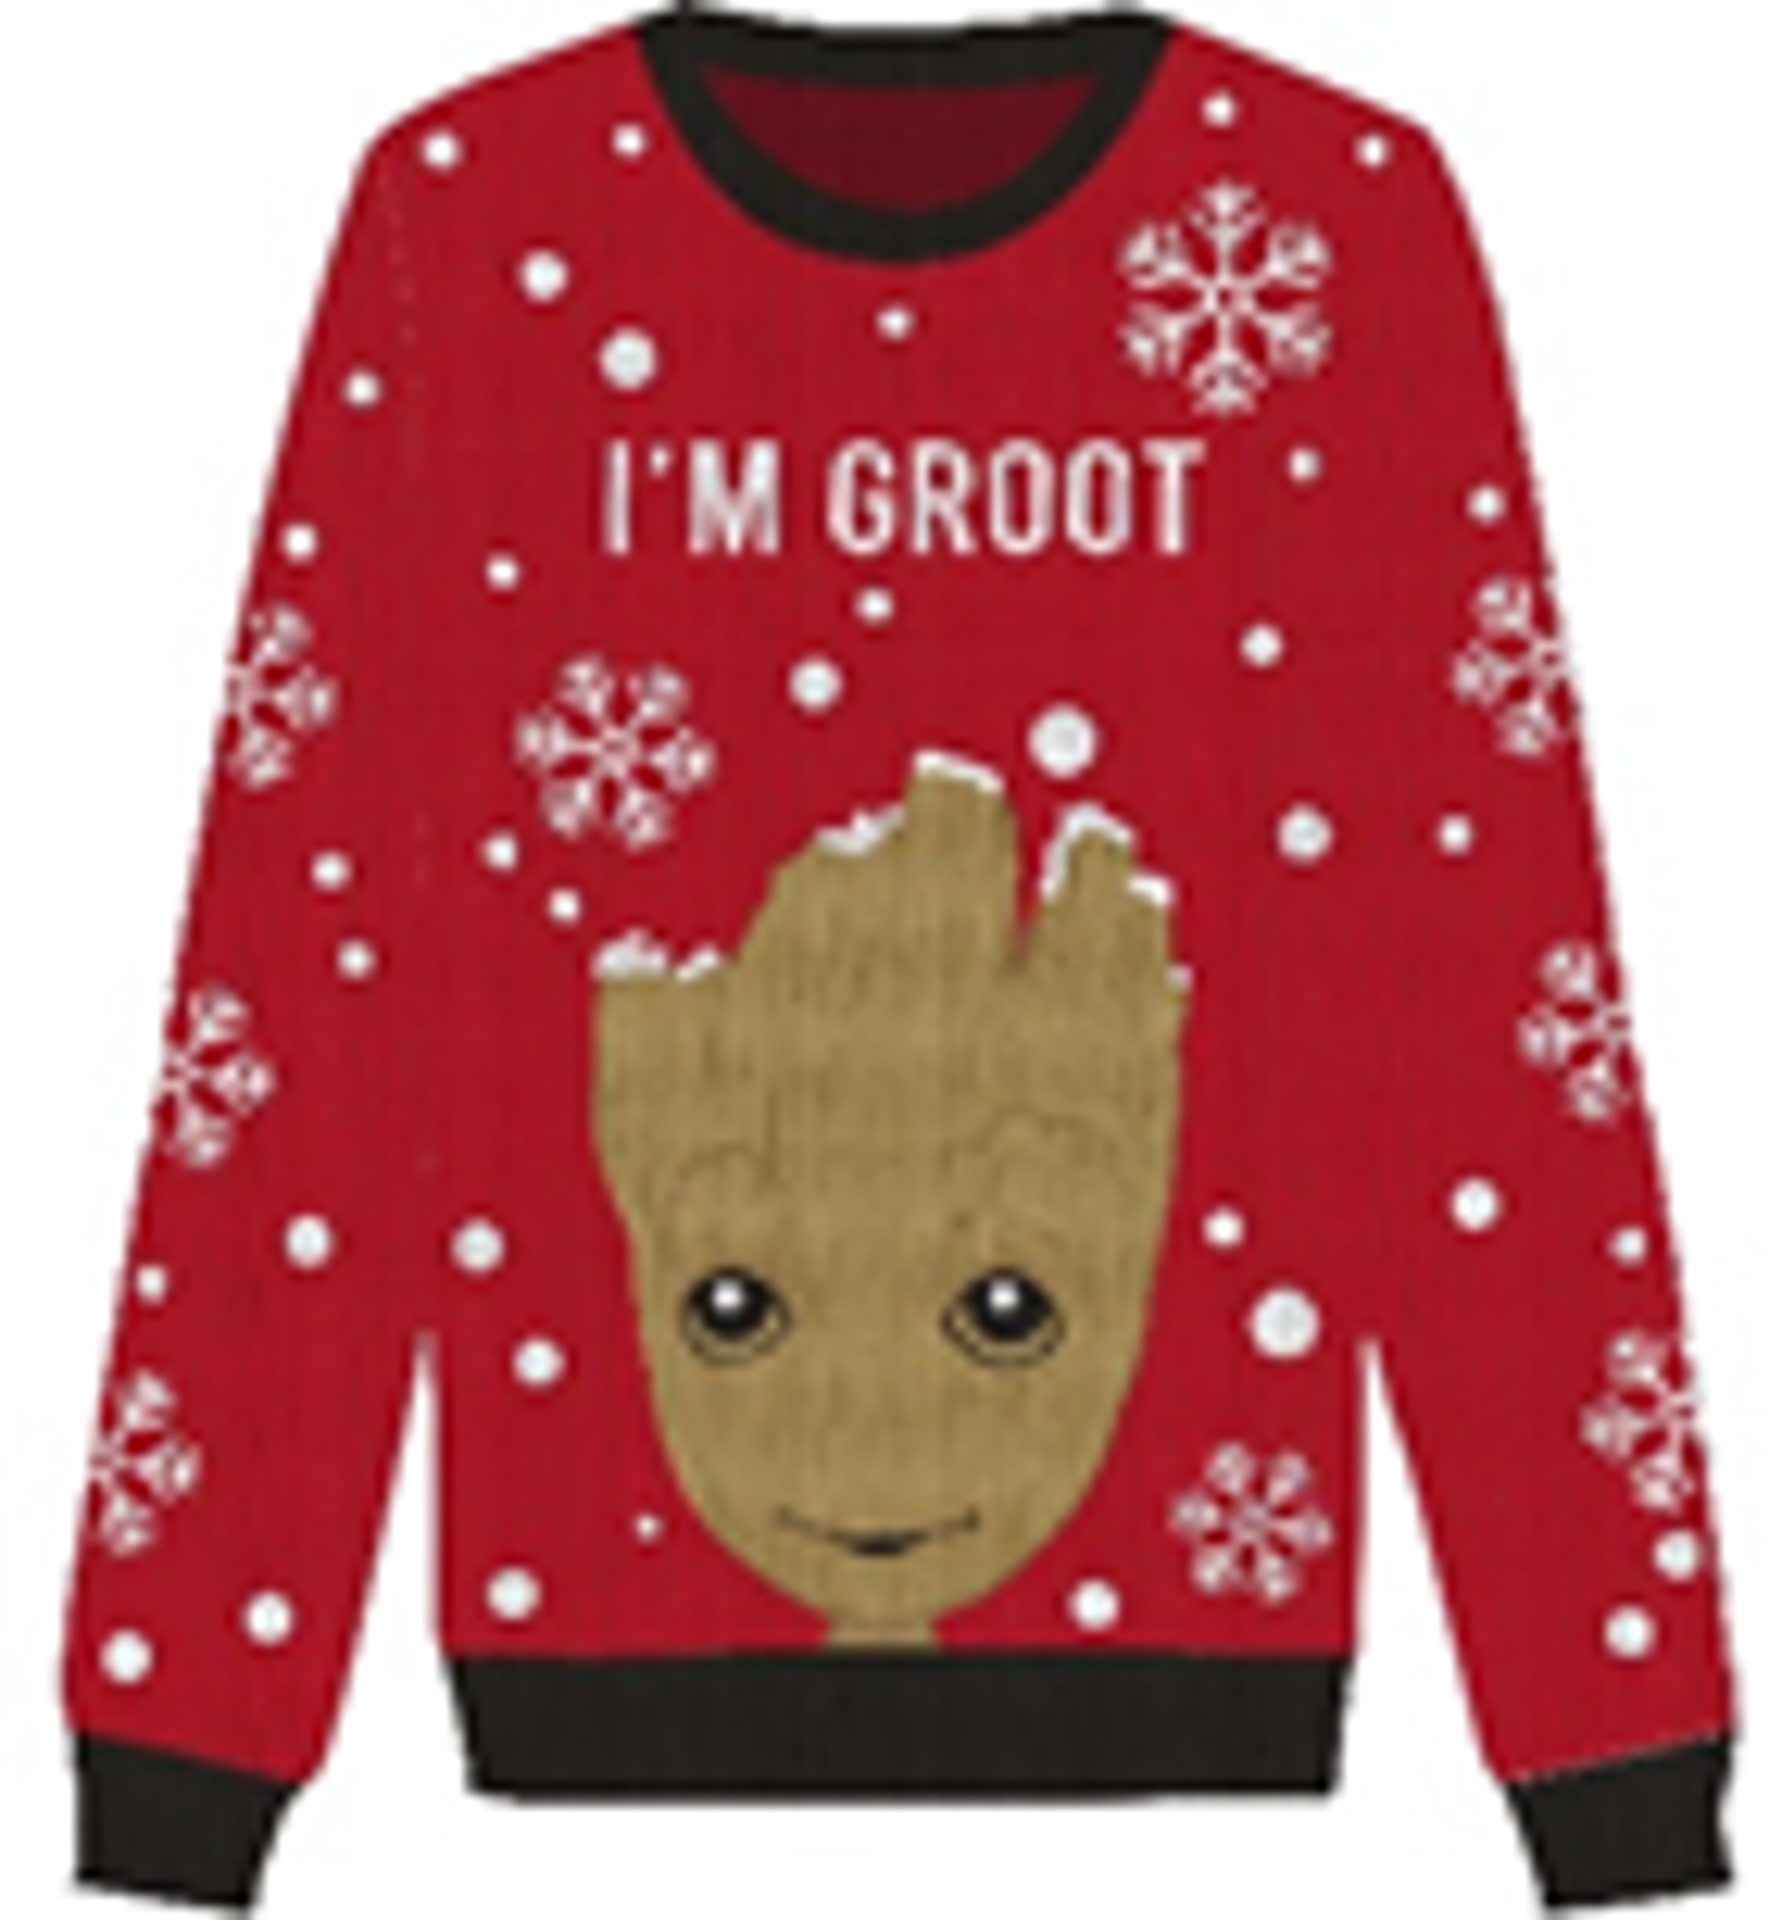 § Marvel - I'm Groot Christmas Sweater L